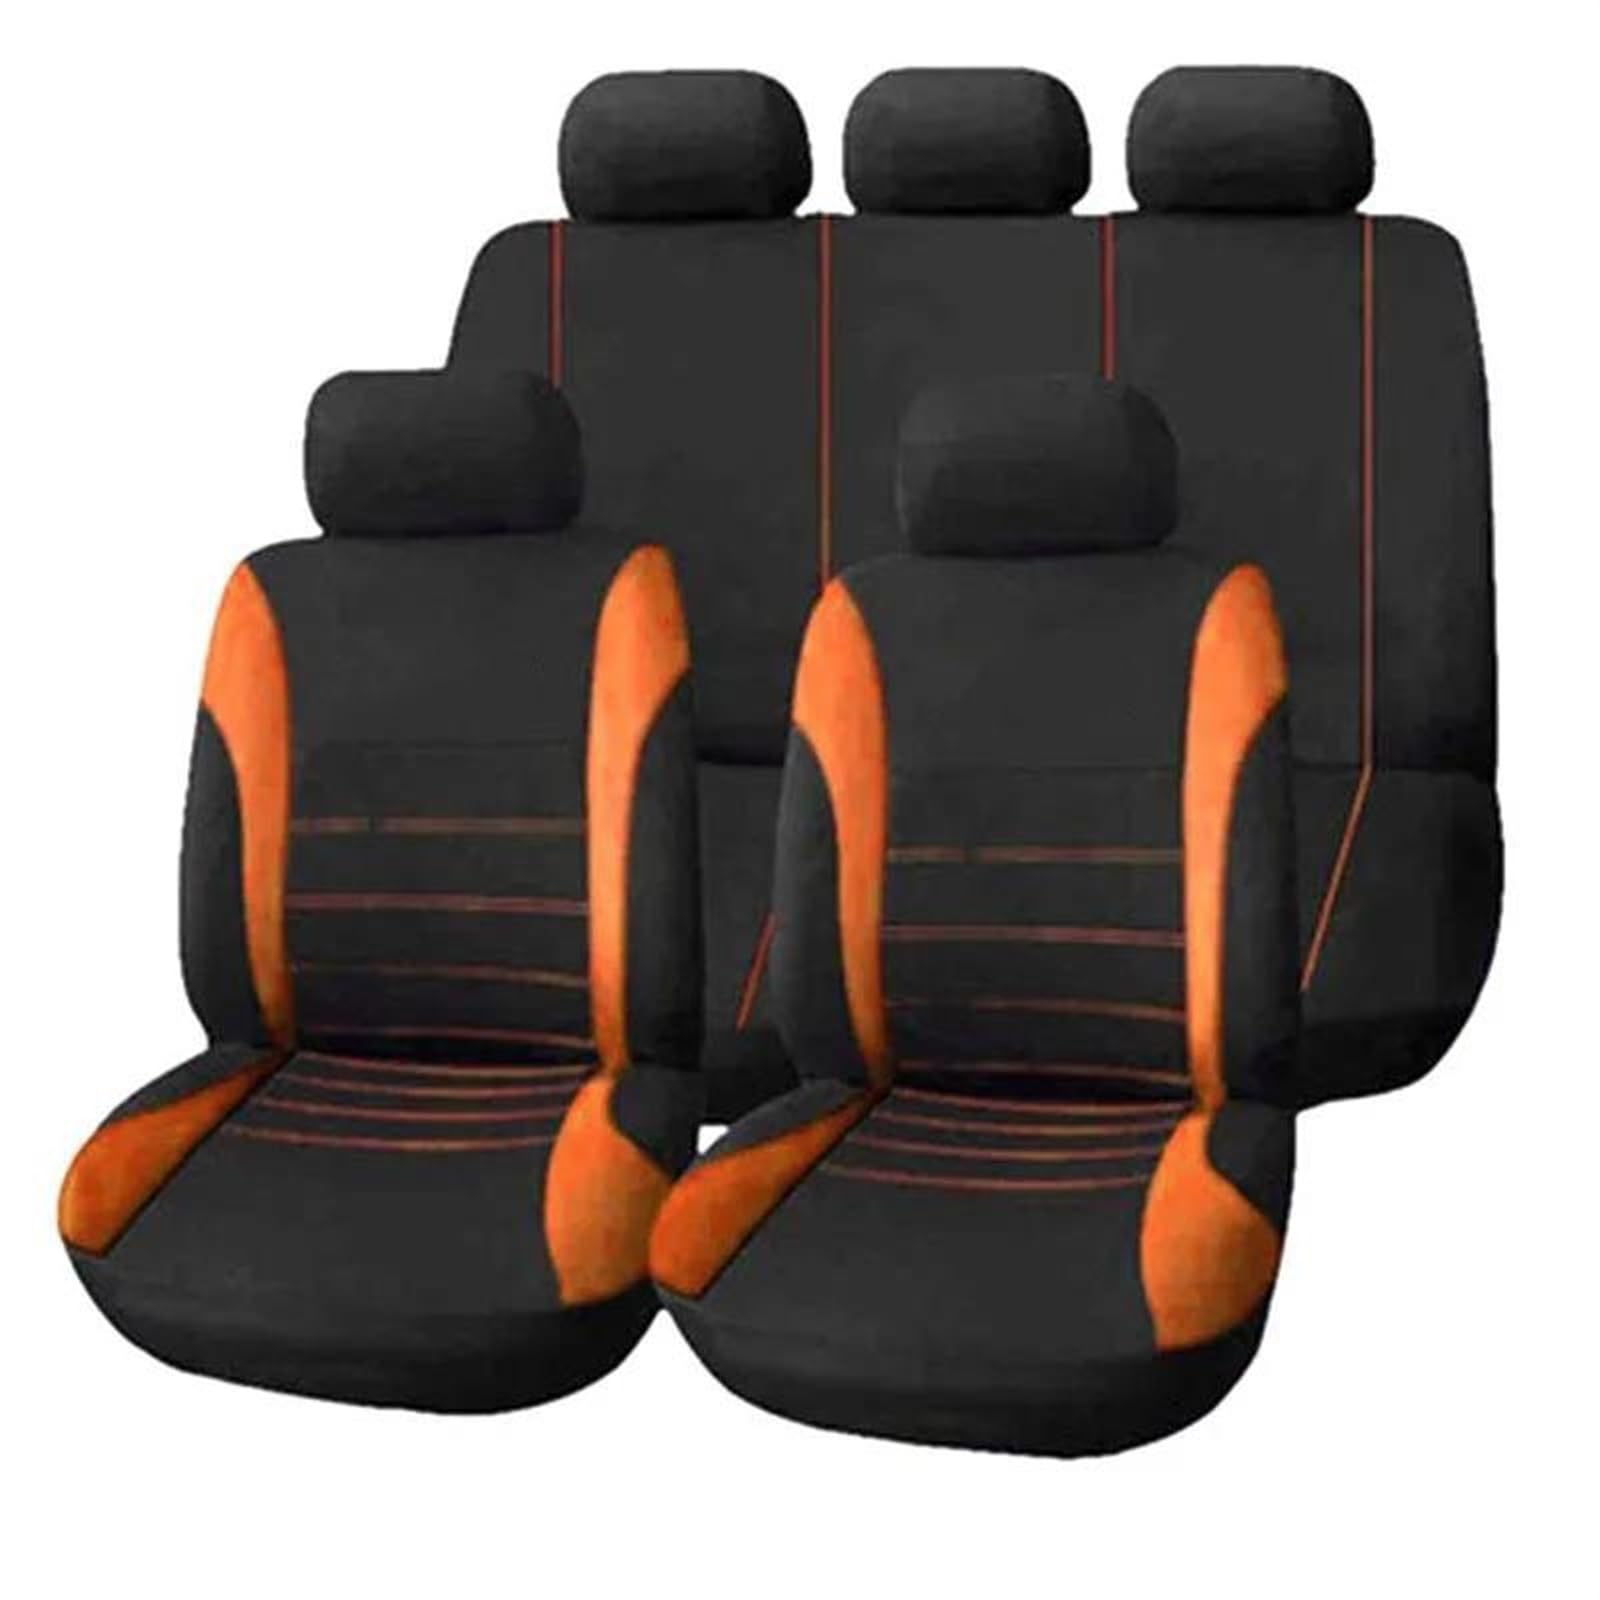 DZSQOSJB SitzbezüGe Auto Autositzbezüge Universal-Autositzbezug Autositzschutzbezüge Für Autoinnenausstattung Vordersitze(Orange) von DZSQOSJB